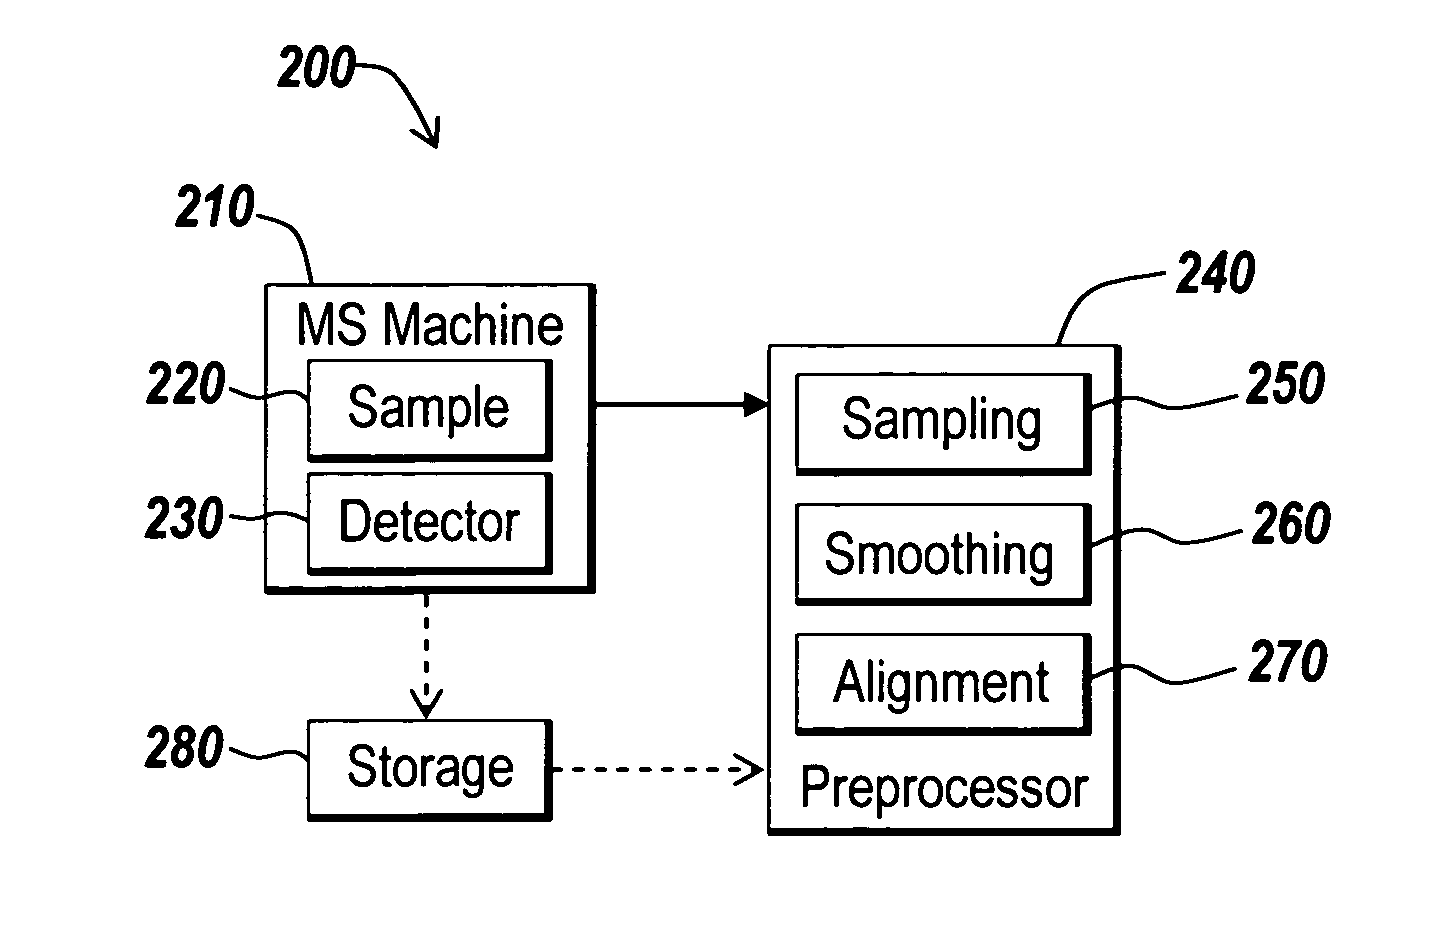 Alignment of mass spectrometry data